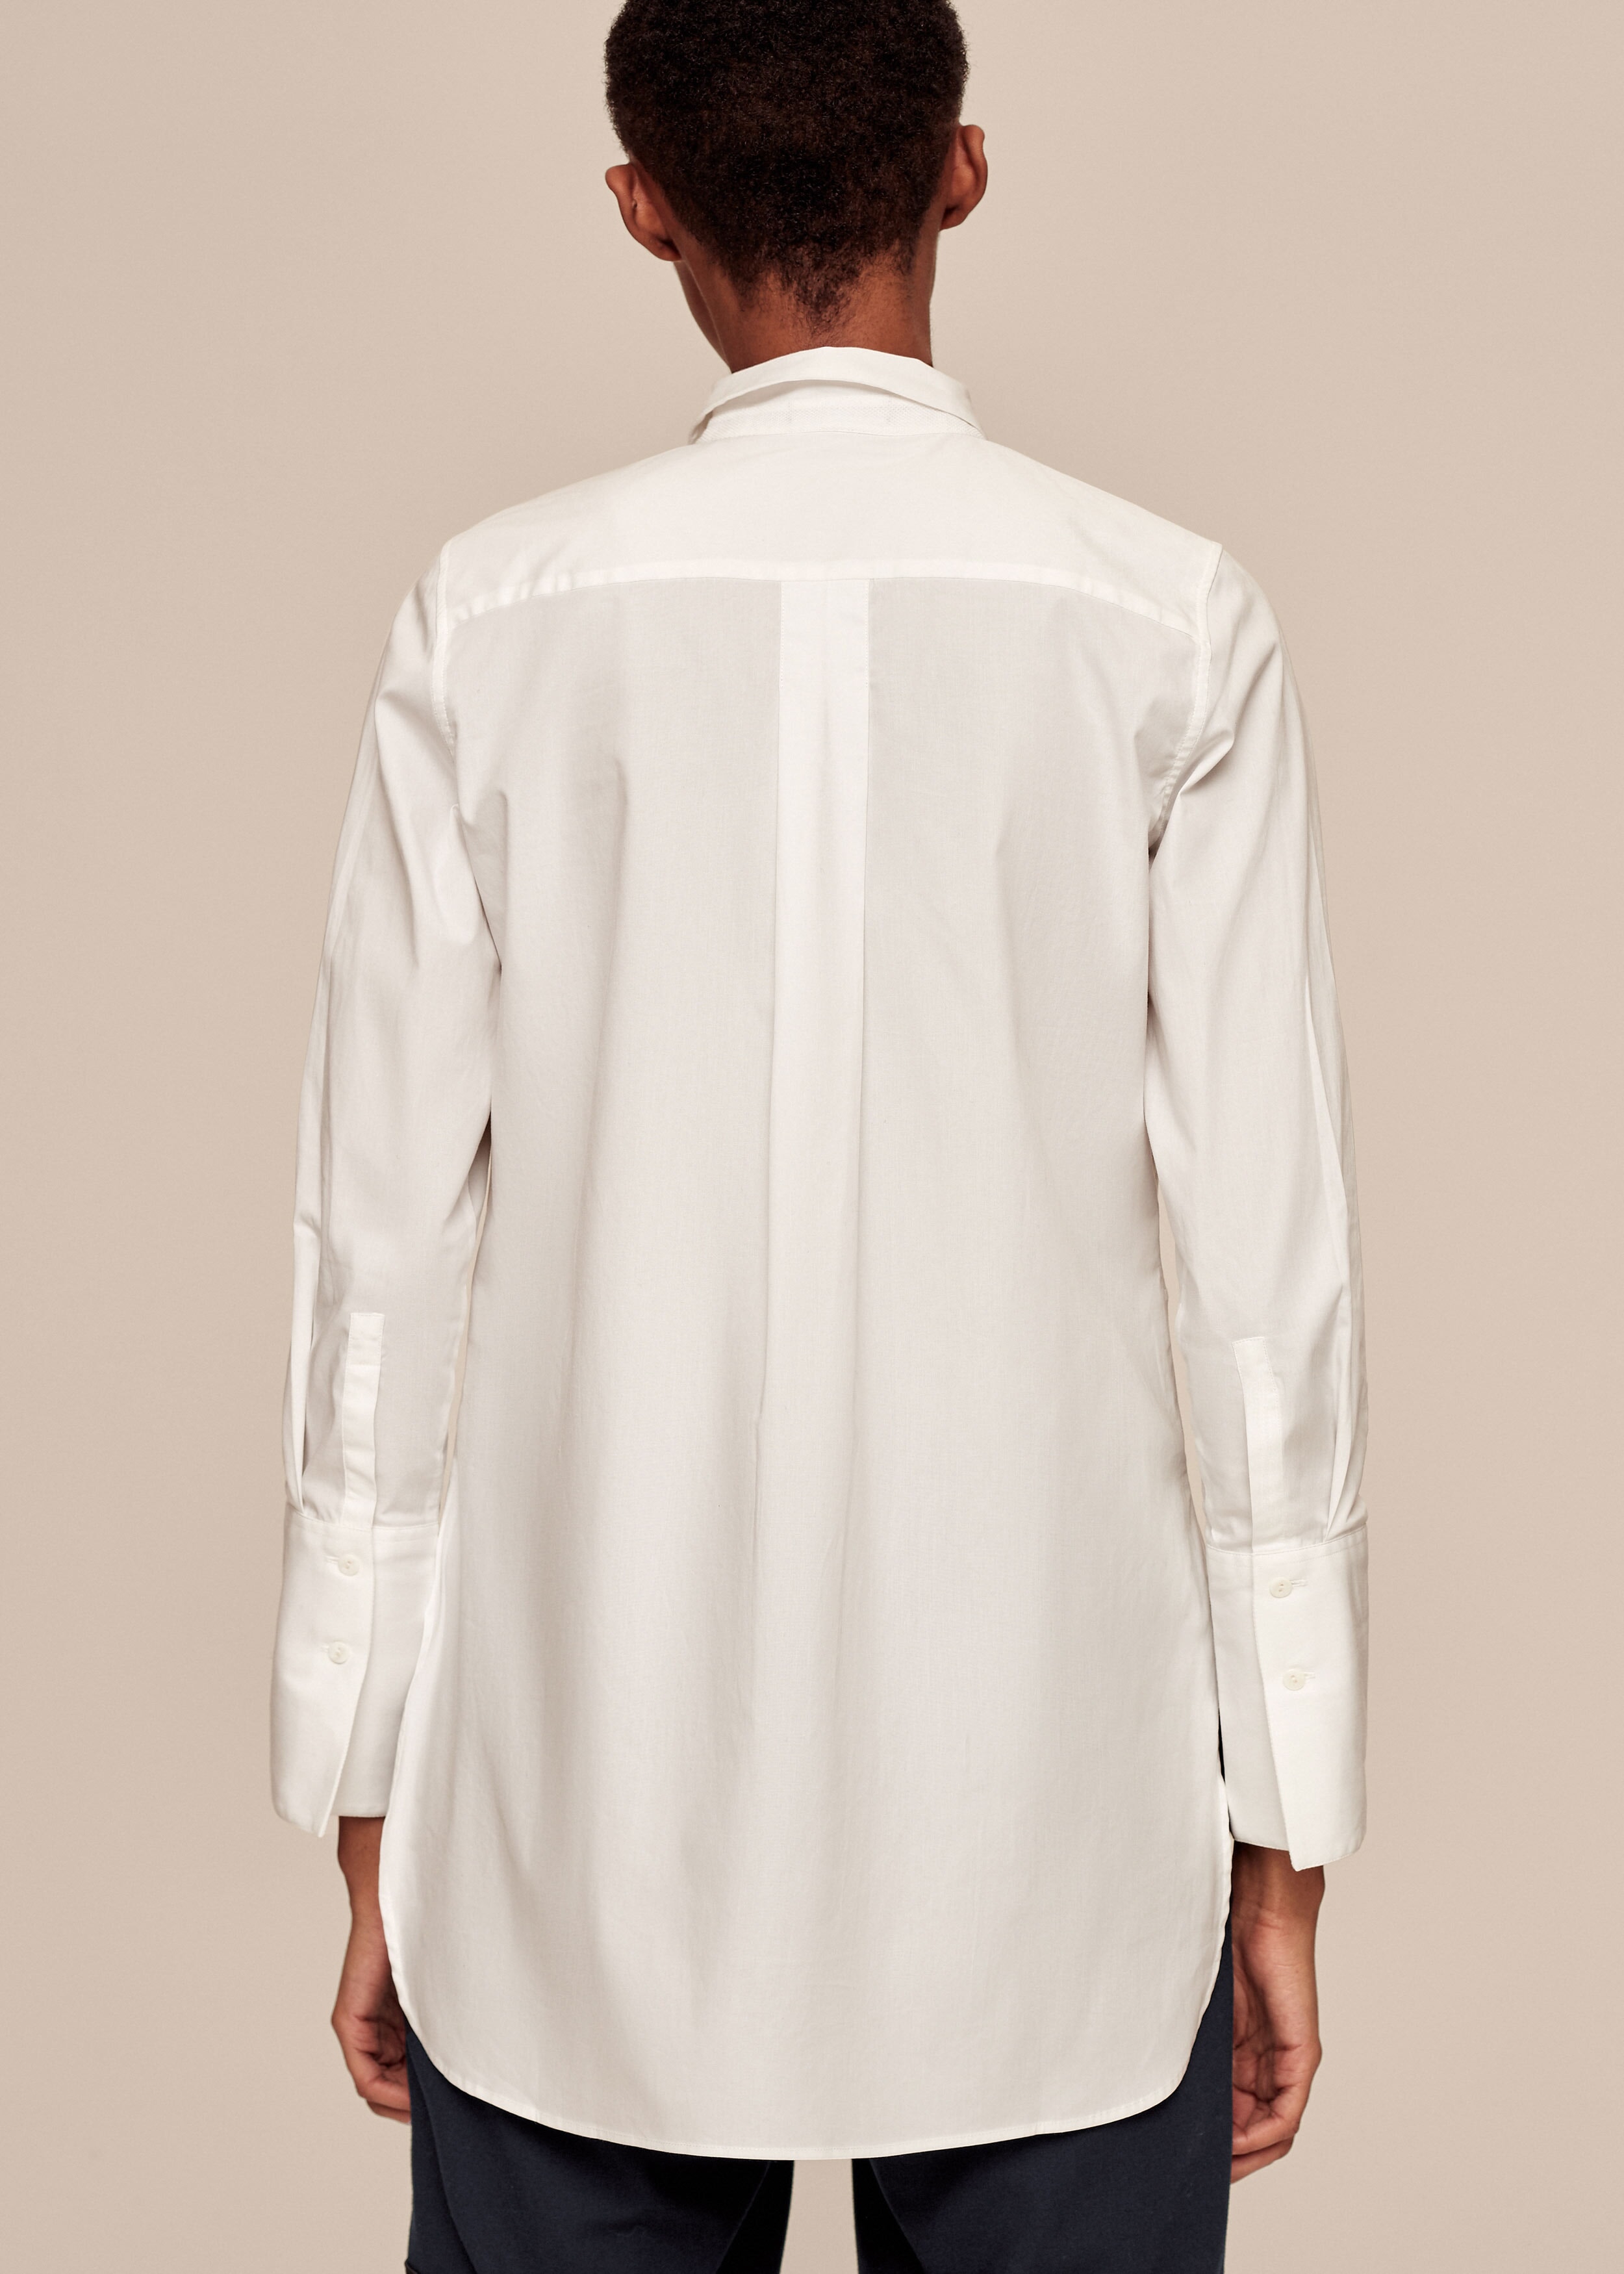 Longline White Cotton Shirt White